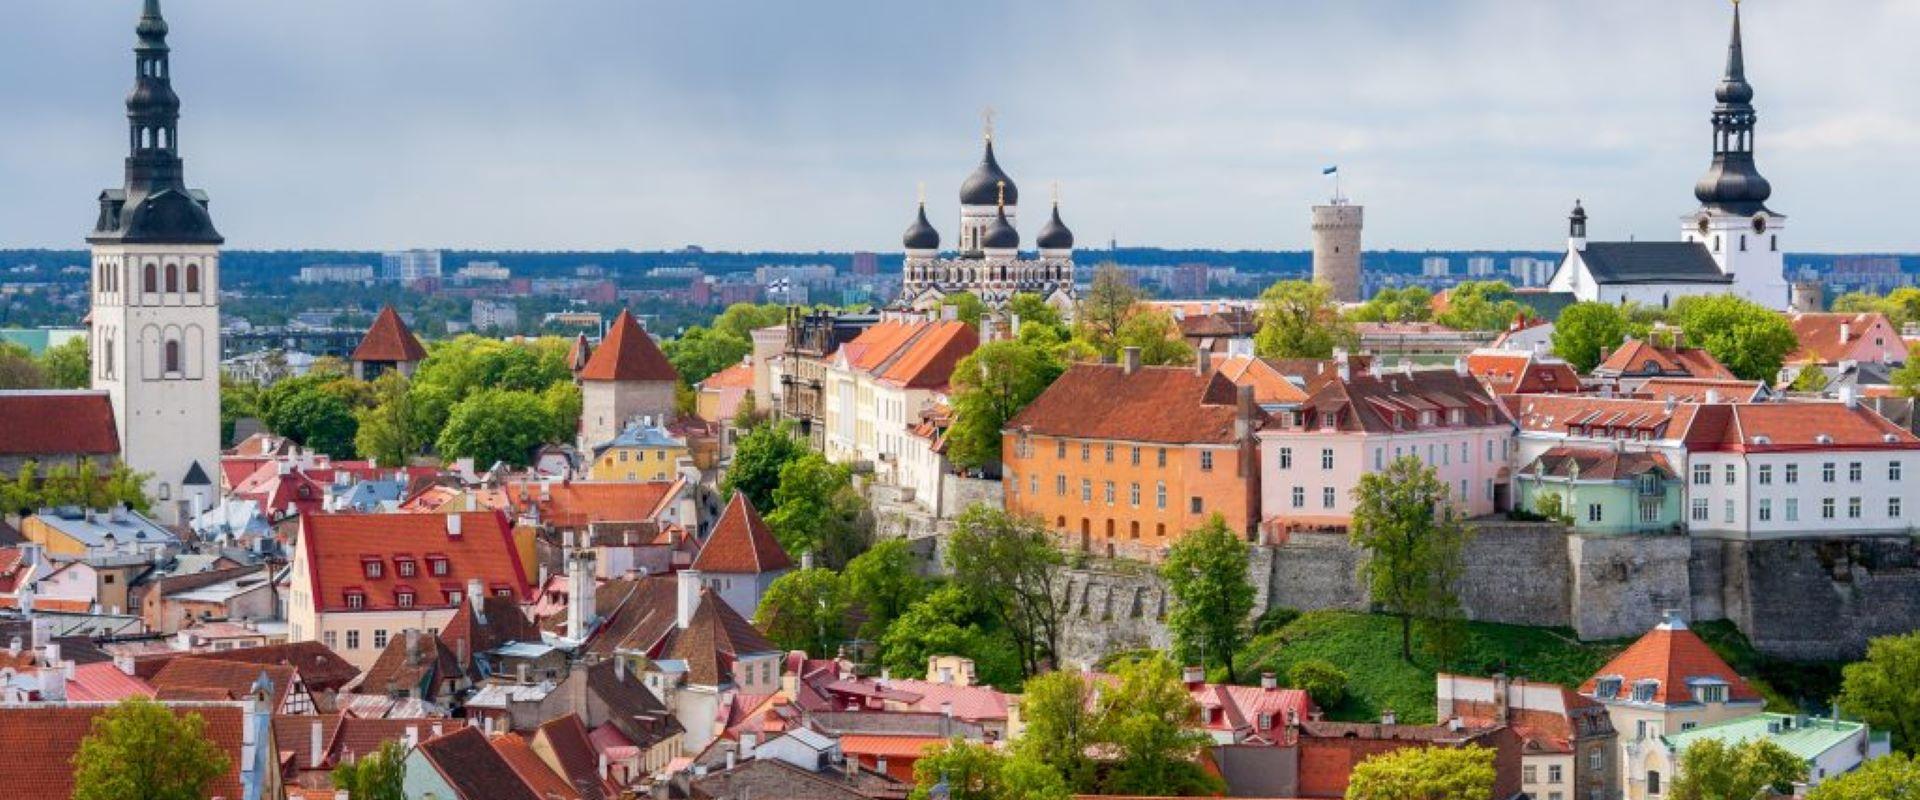 Guided walk in Tallinn Old Town and car tour in the Kadriorg–Pirita region